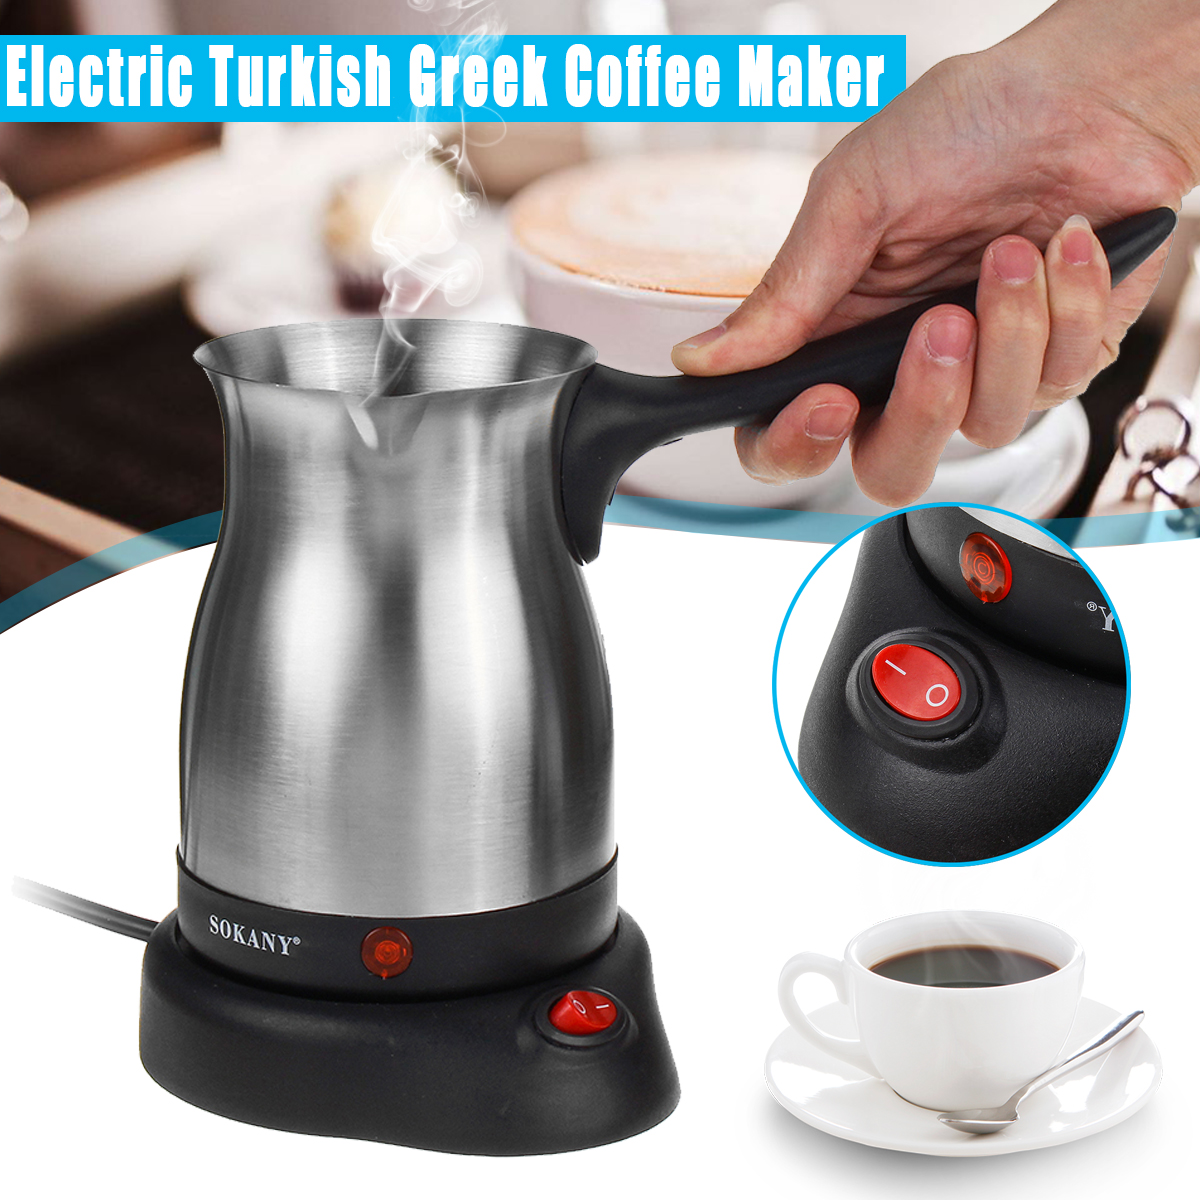 Stainless Steel Electric Turkish Greek Coffee Maker Machine Espresso Moka Pot 9